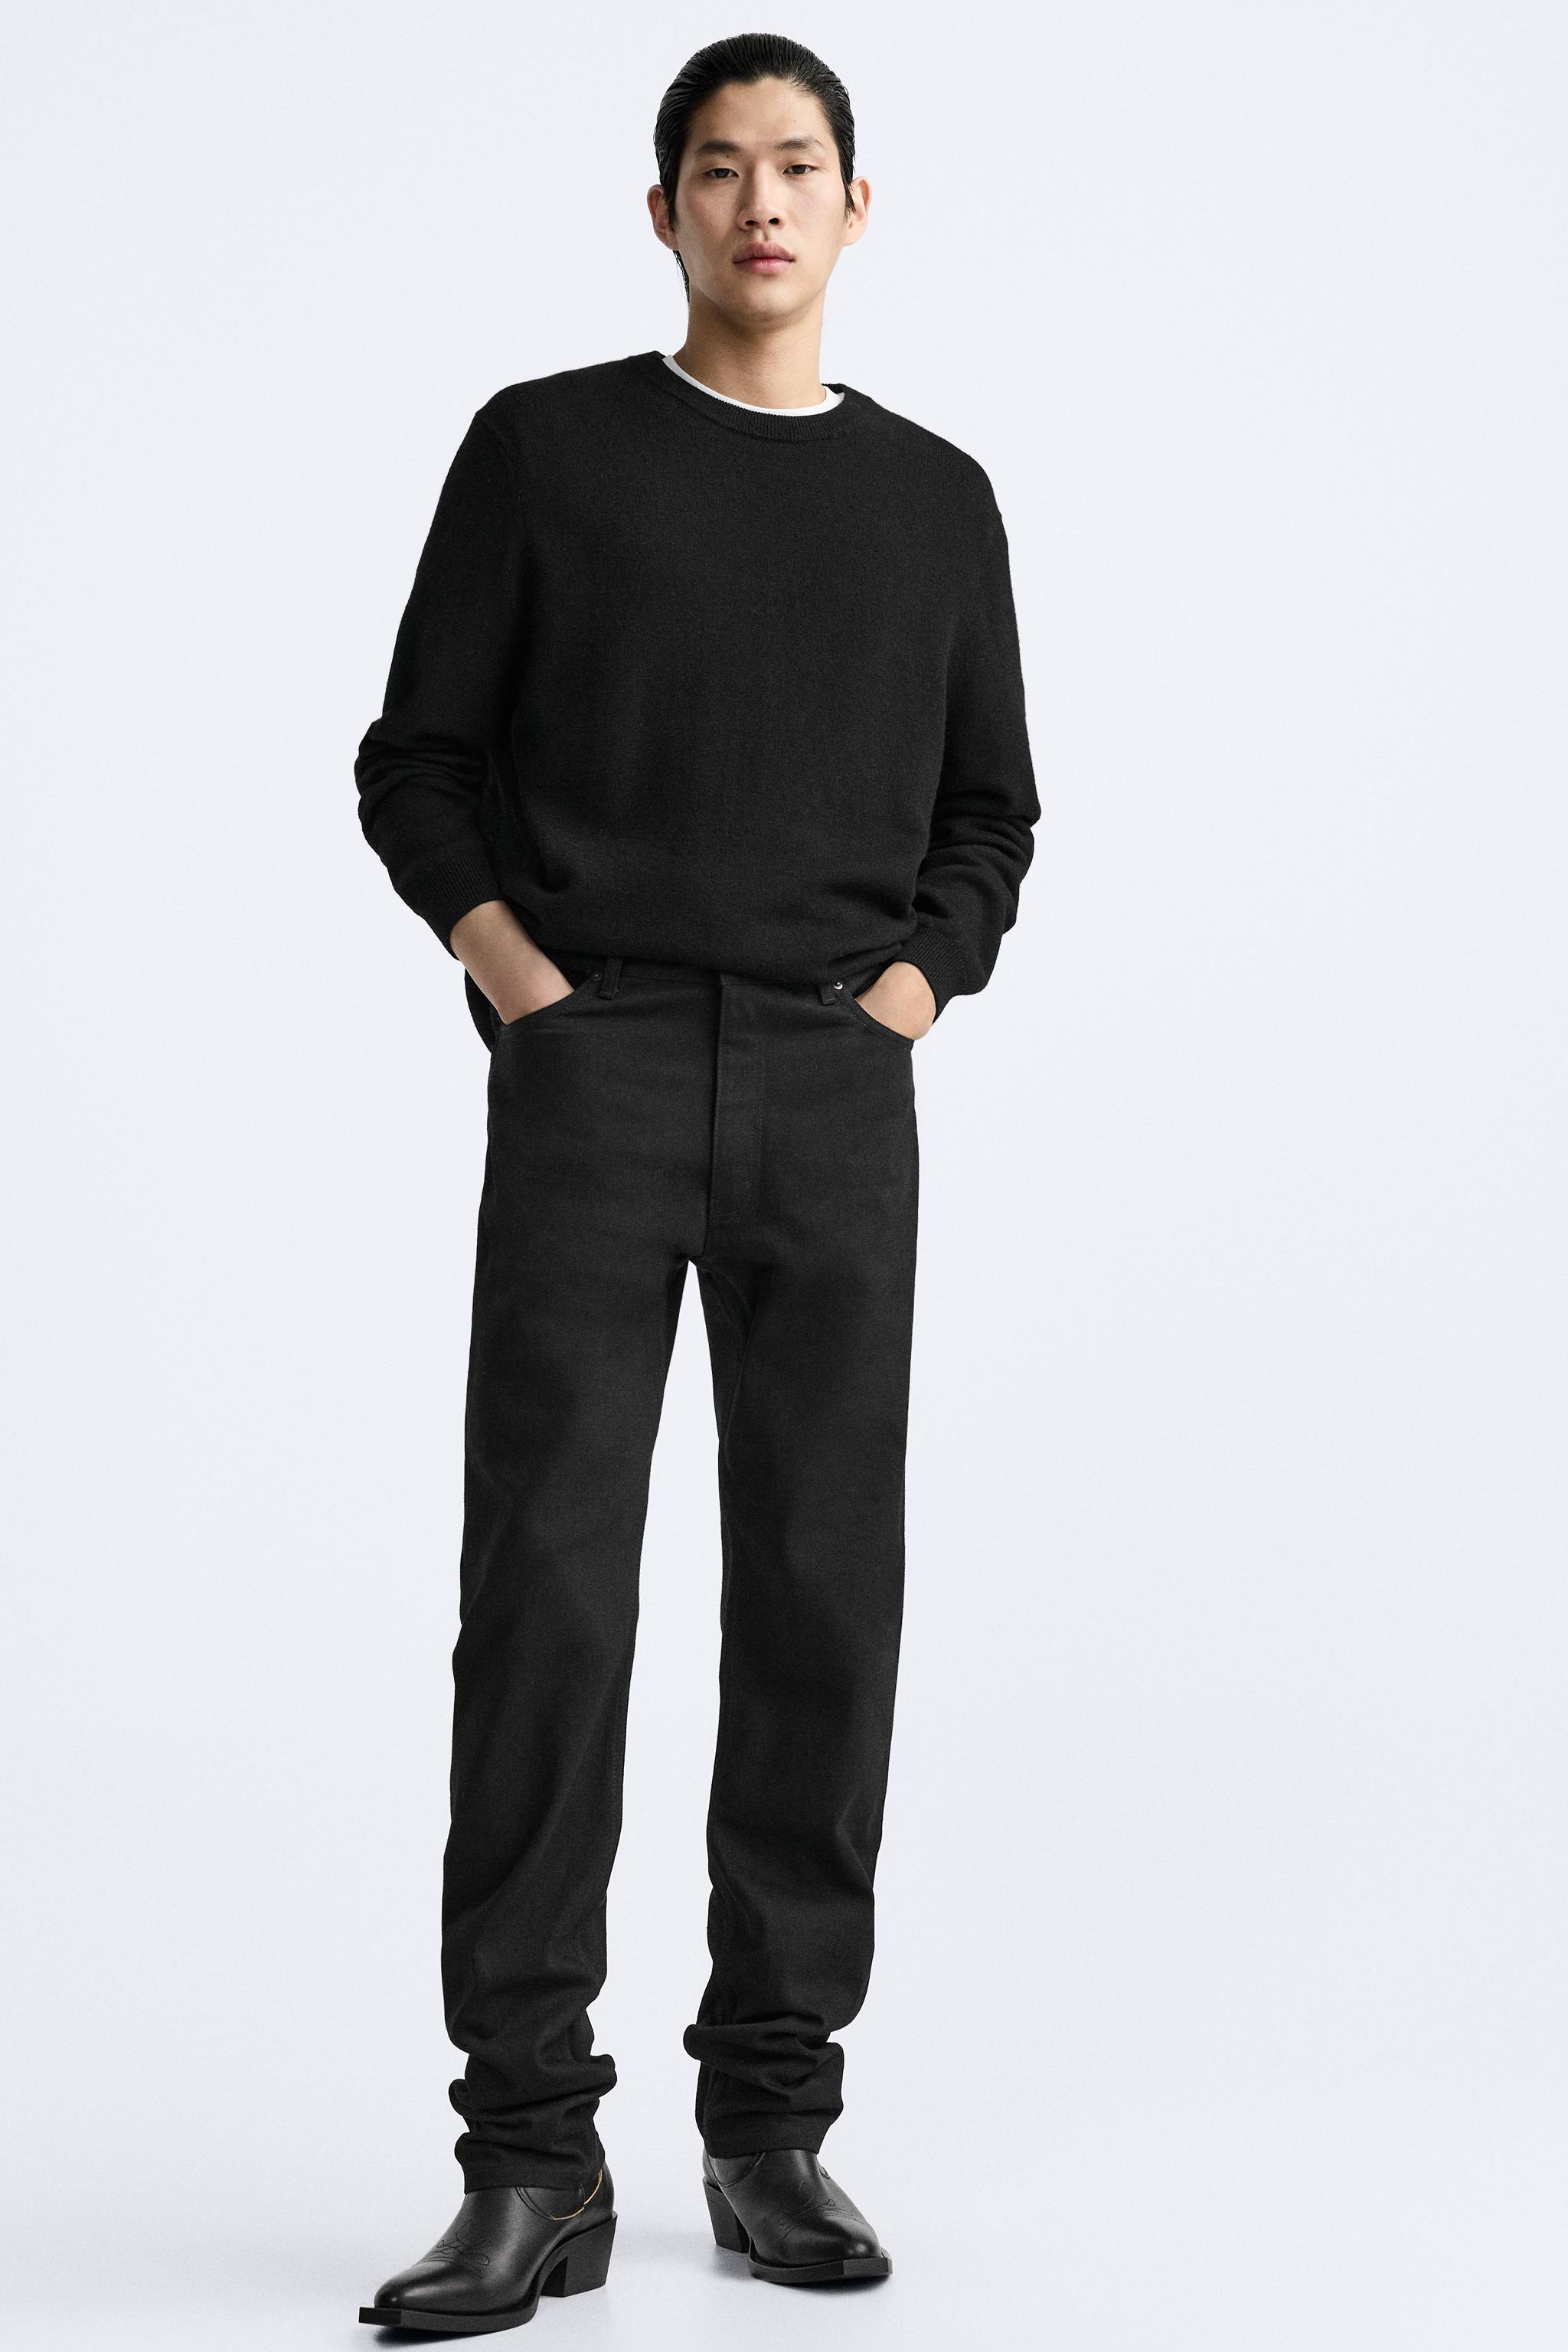 Round Neck Plain Women Black Cotton Winter Baggy Sweatshirts, Size: Large  at Rs 220/piece in Noida